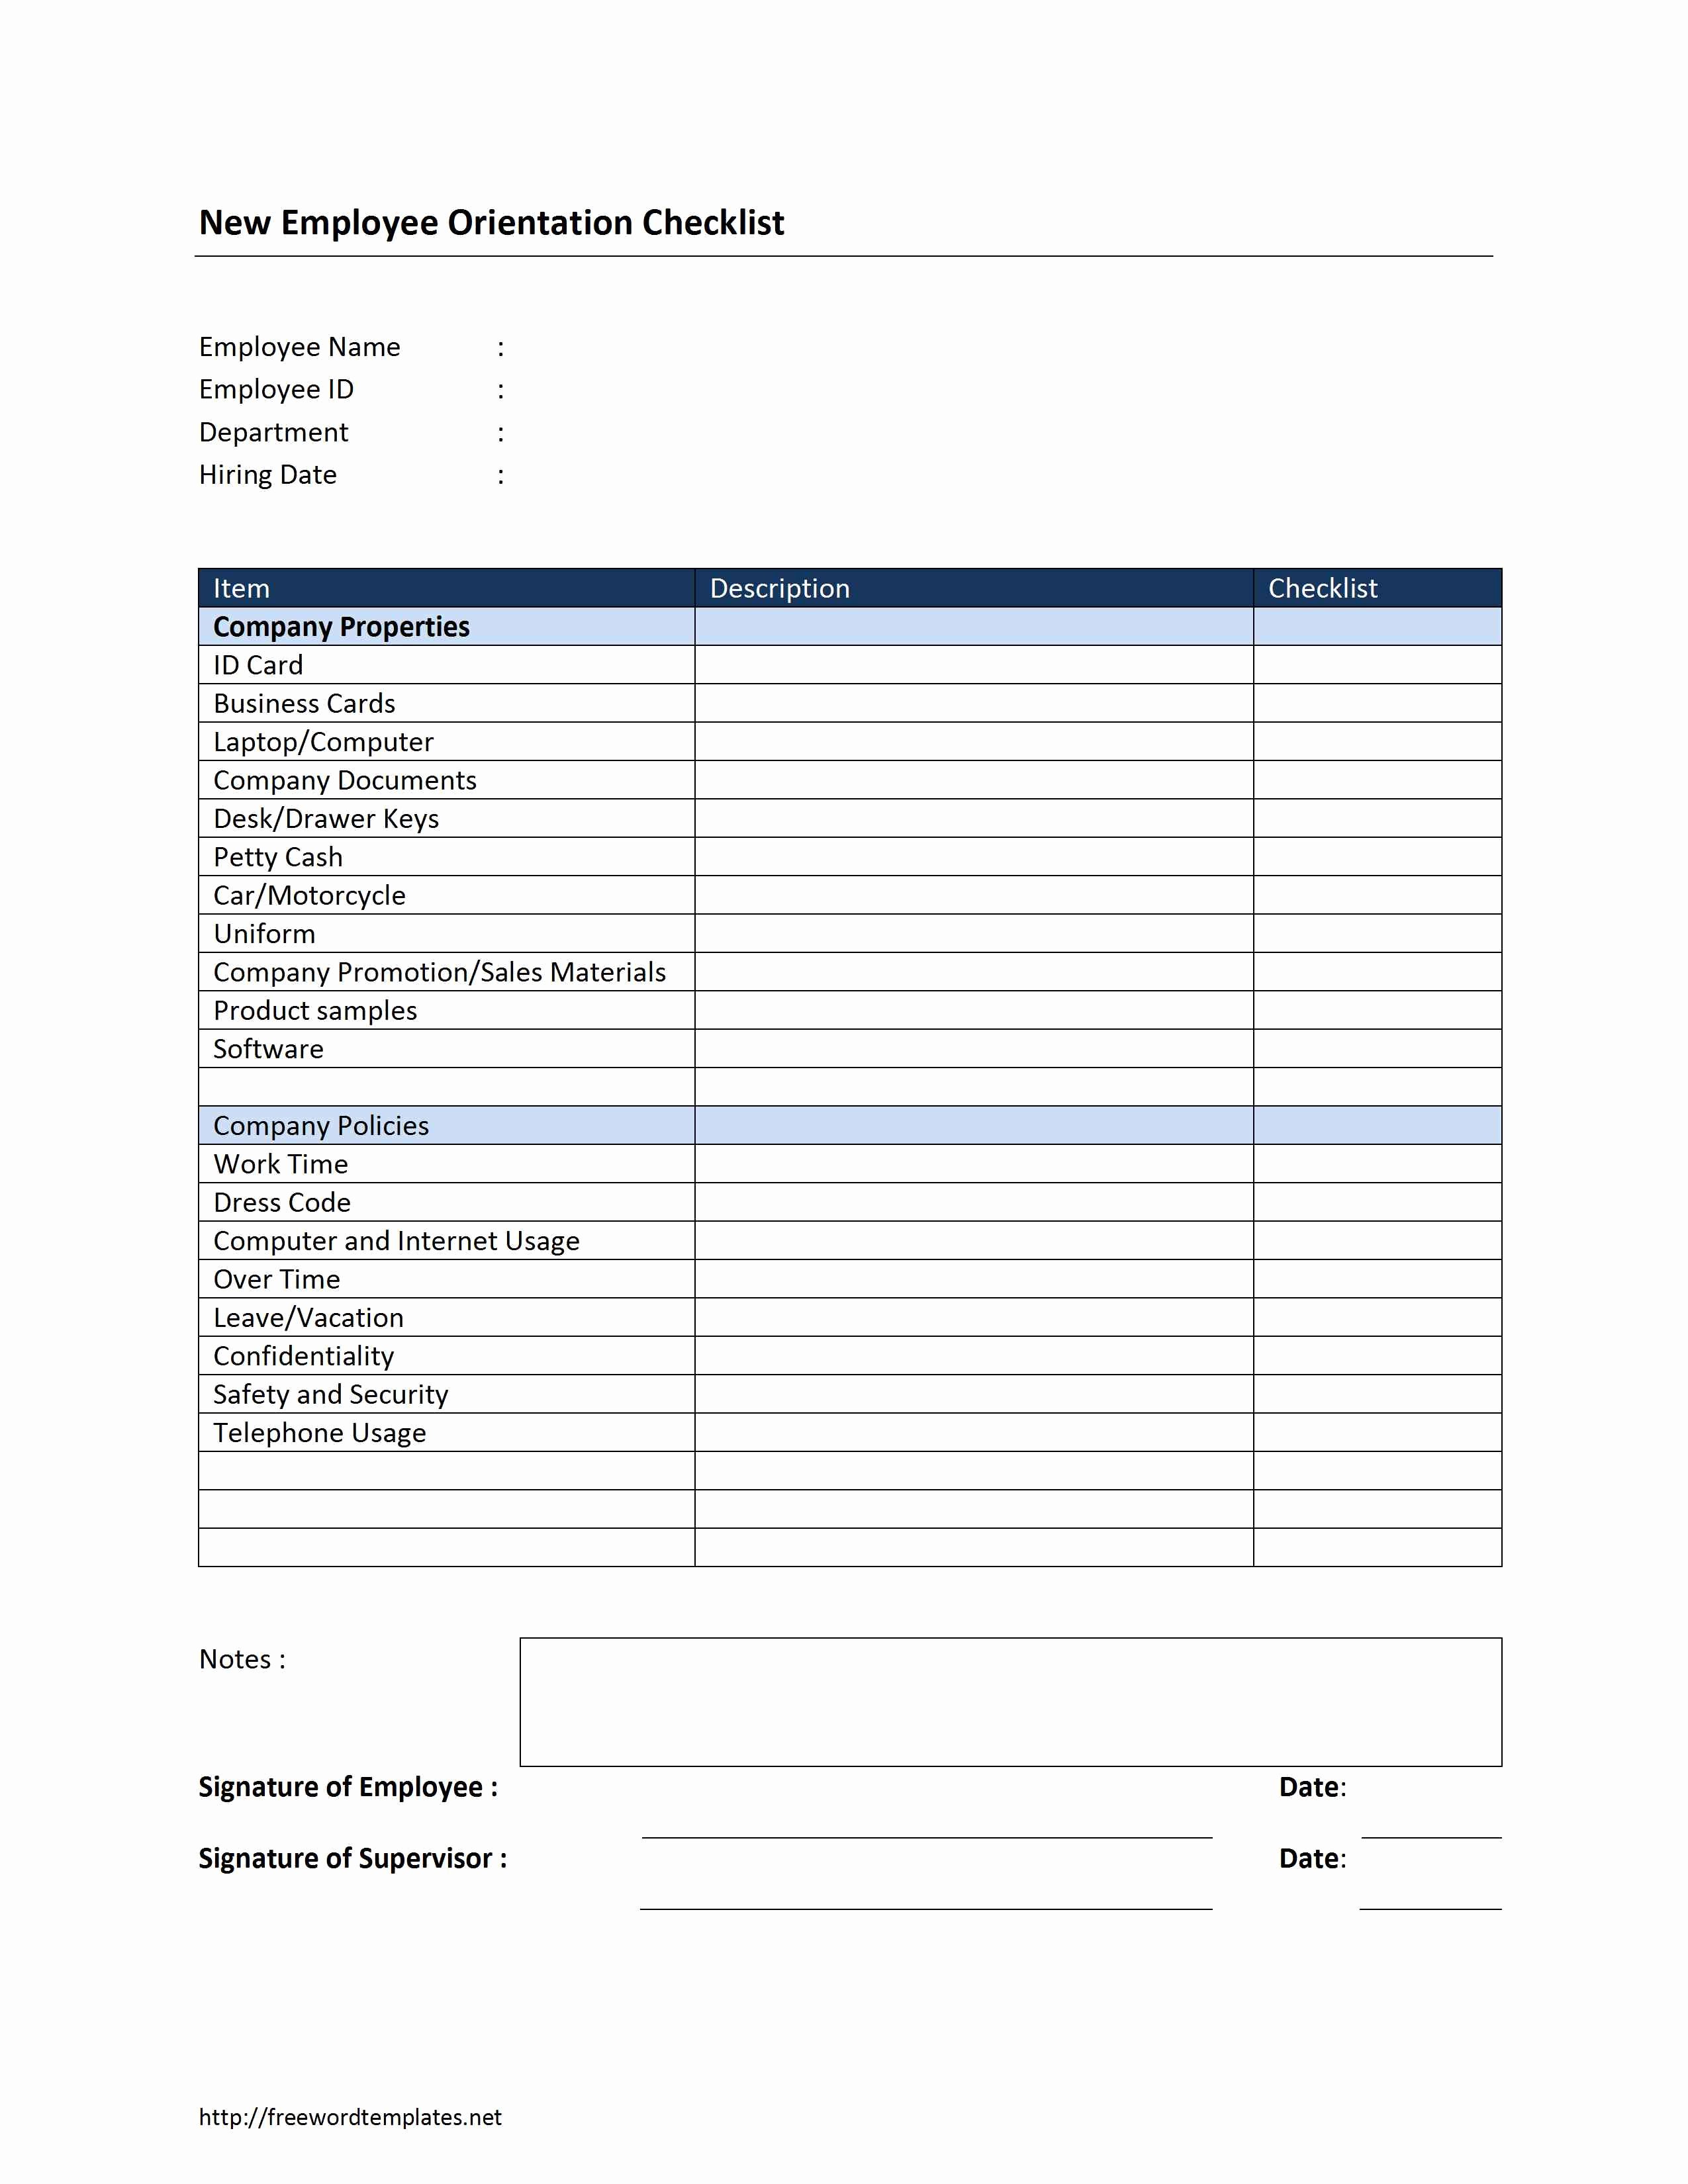 New Hire Checklist Template Unique New Employee orientation Checklist